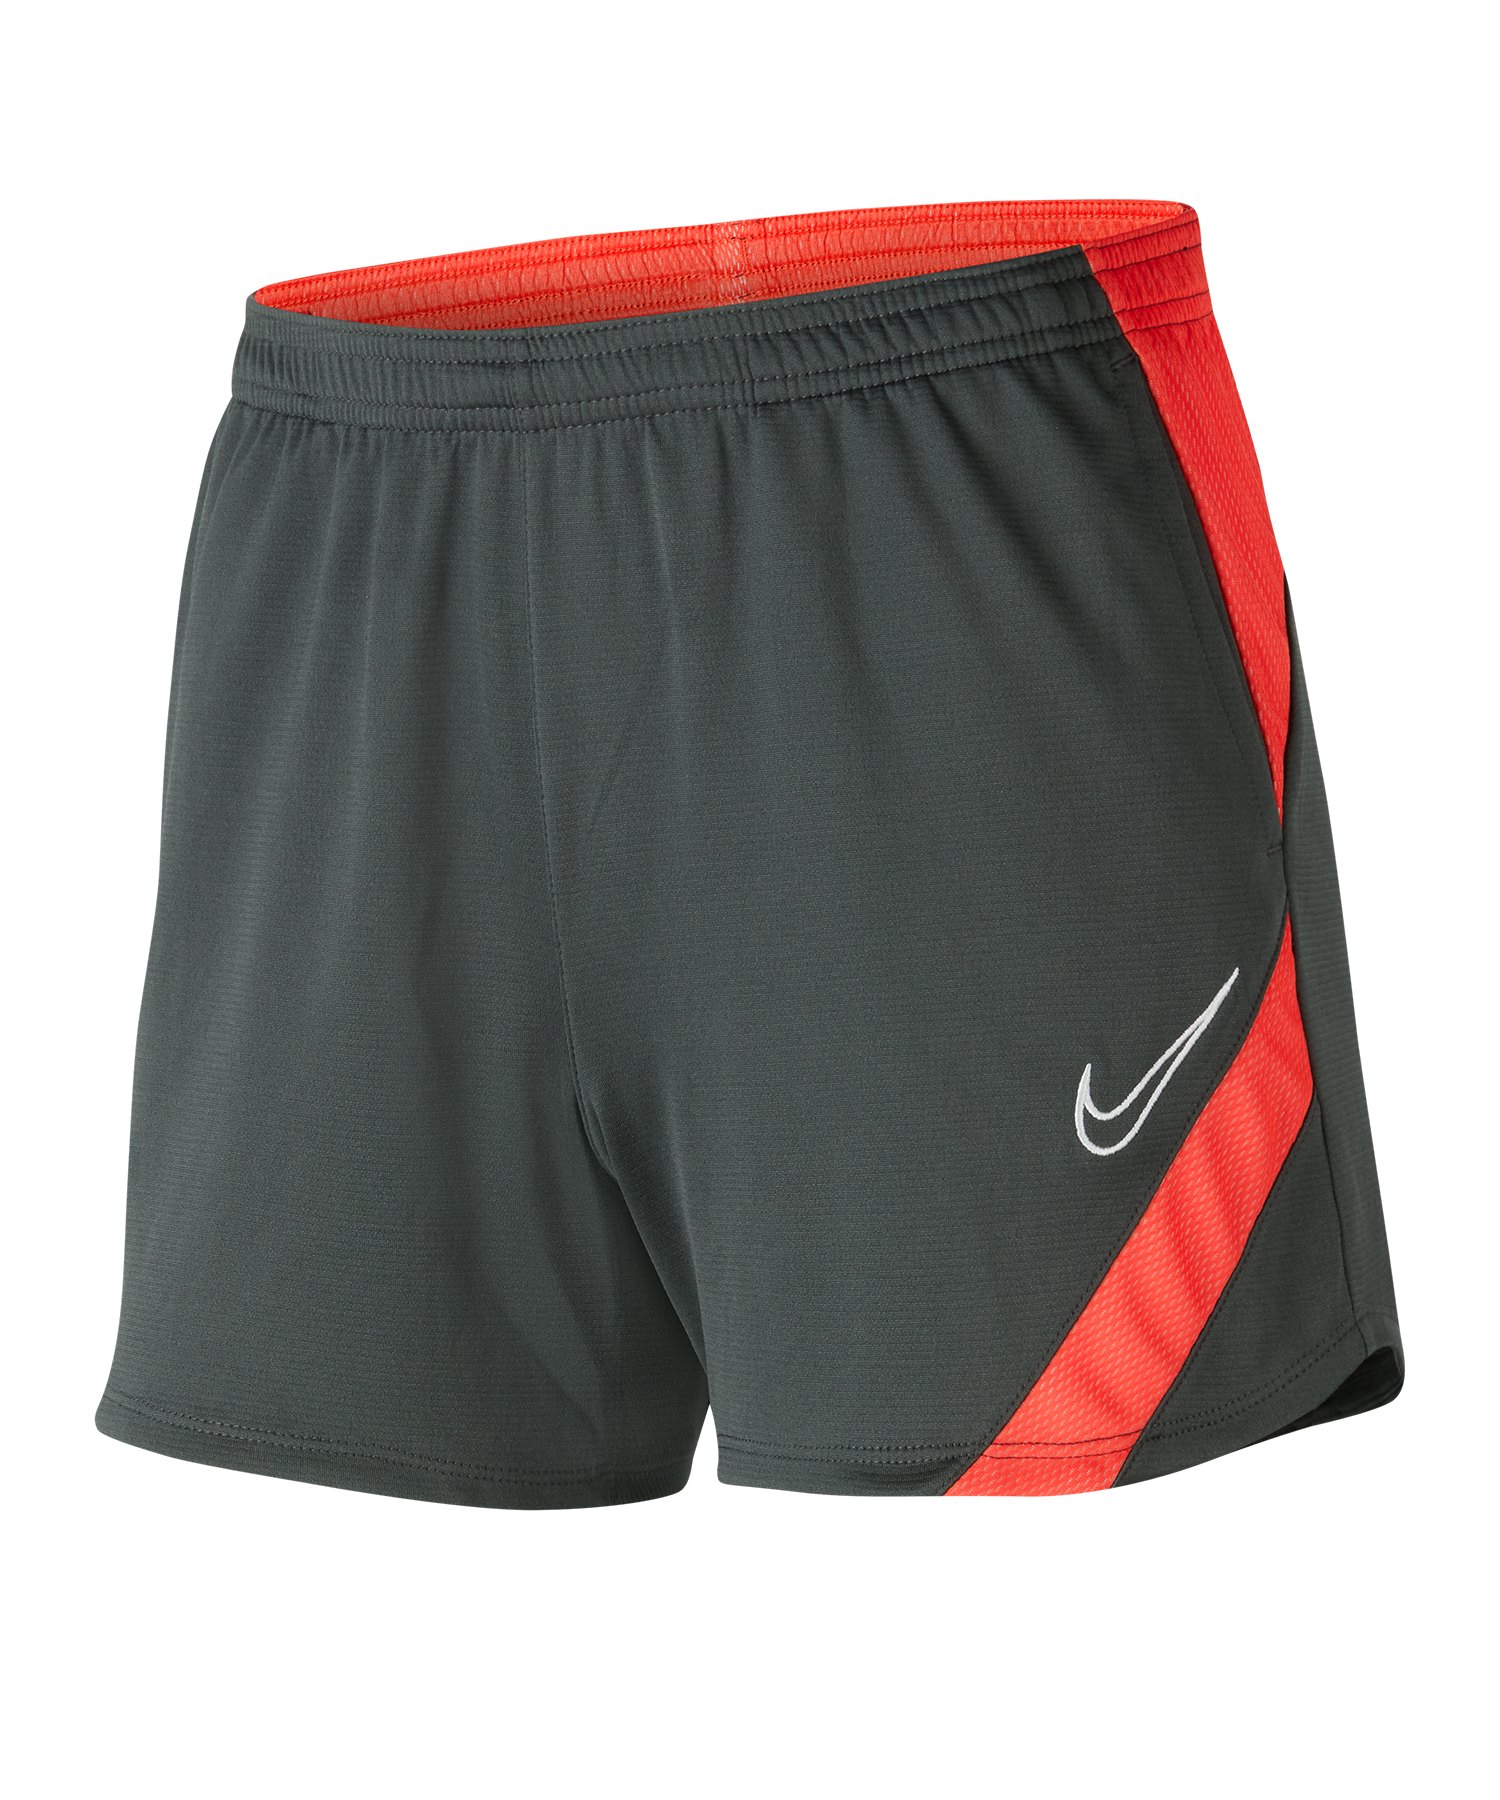 Nike Academy Pro Short Damen Grau Rot F068 - grau